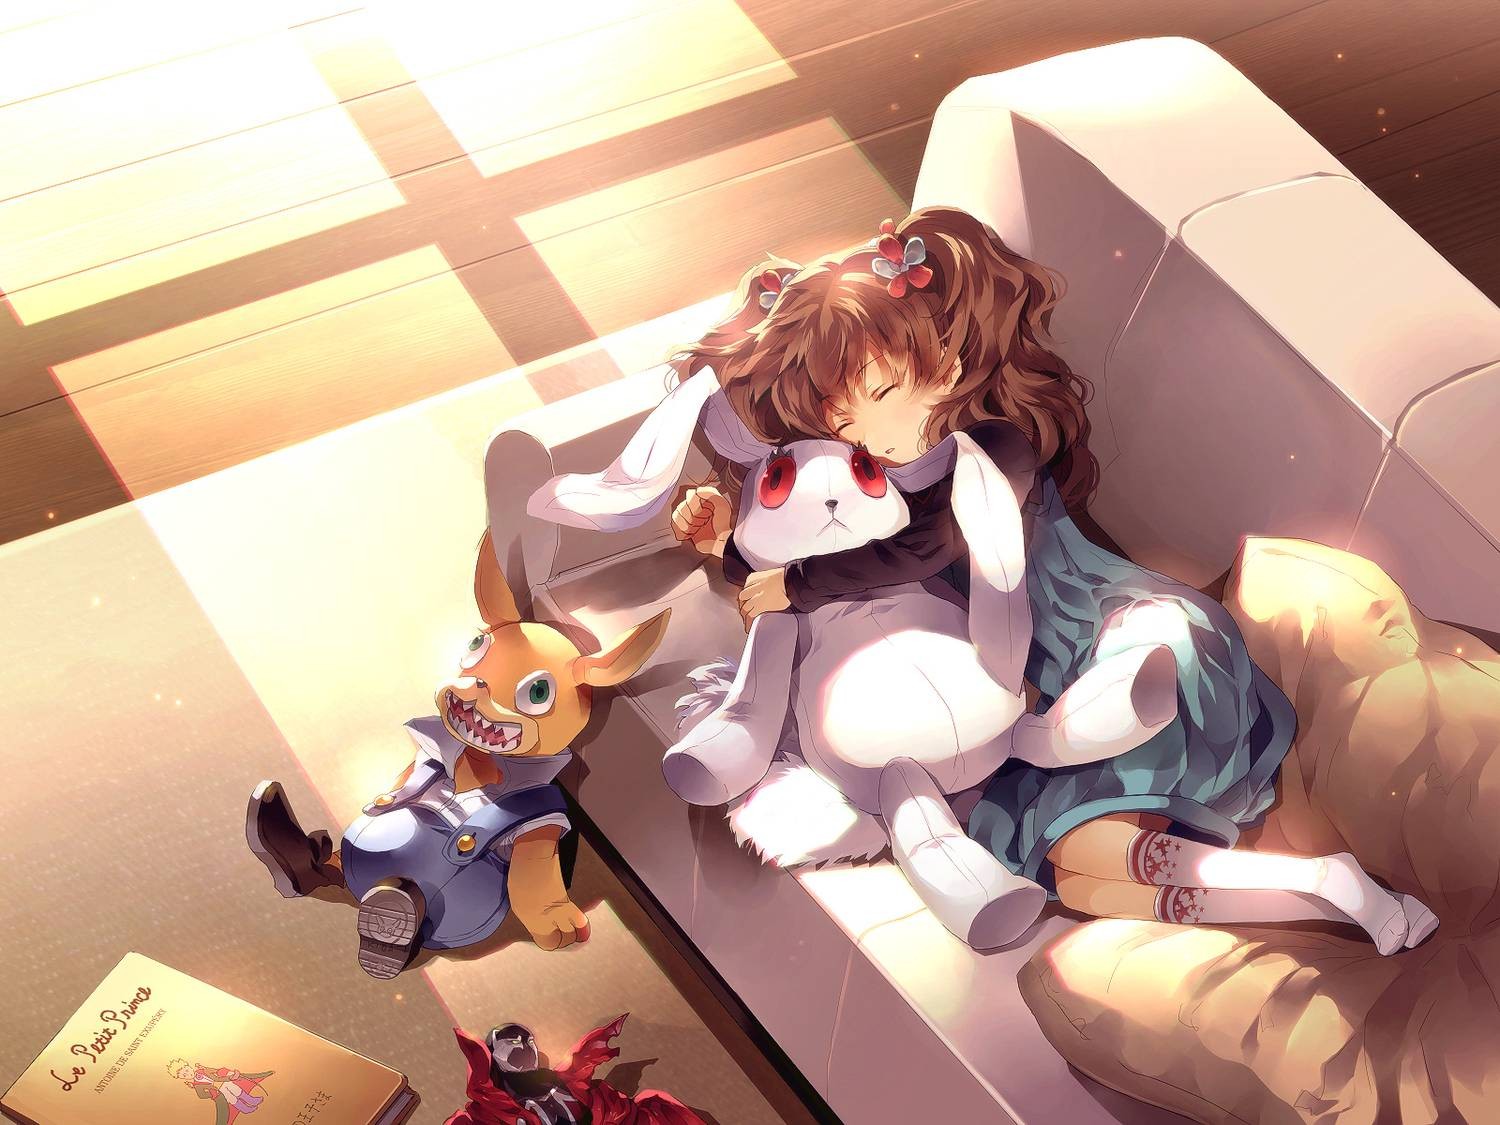 Anime 1500x1125 anime girls anime plush toy women indoors indoors sleeping legs legs together closed eyes